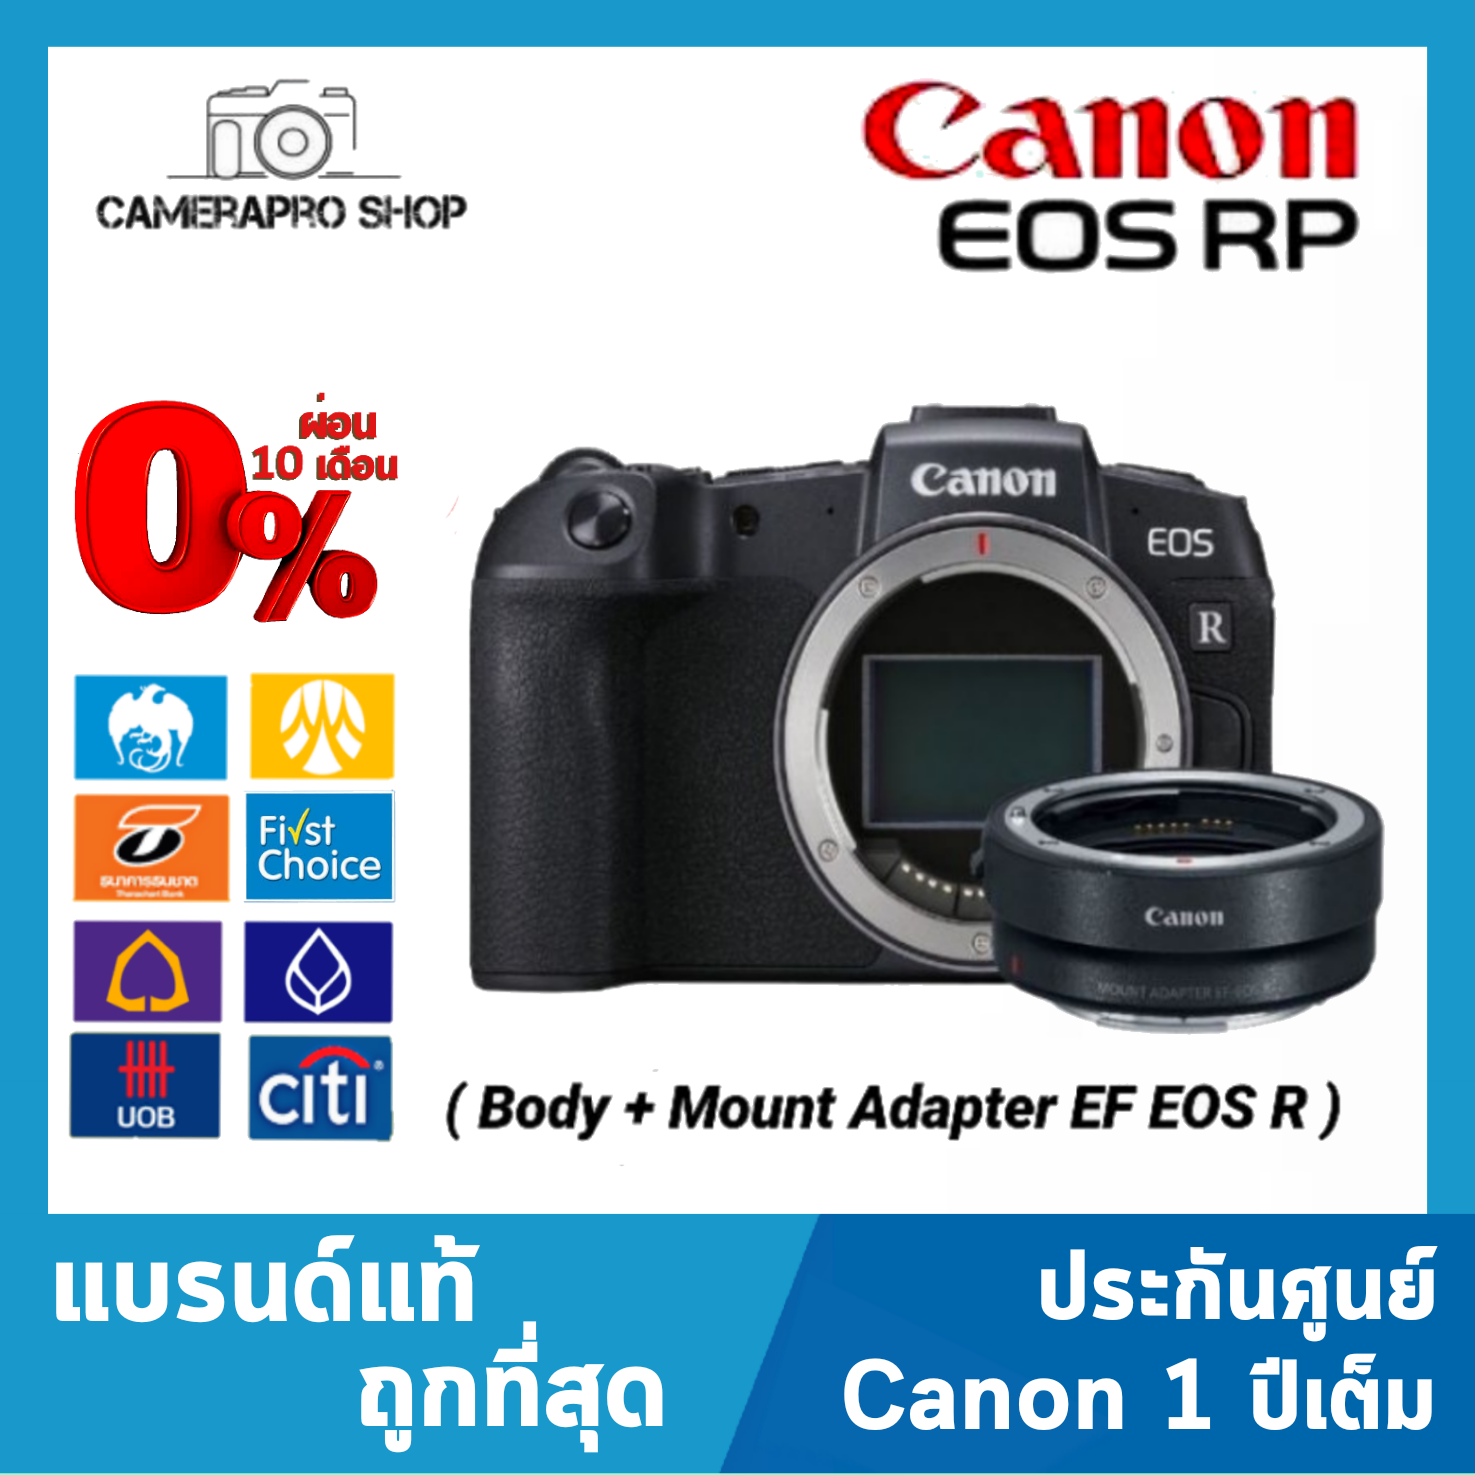 Canon Camera EOS RP (Body) + Adapter R เมนูไทย( ประกันศูนย์ Canon Thailand 1 ปี )